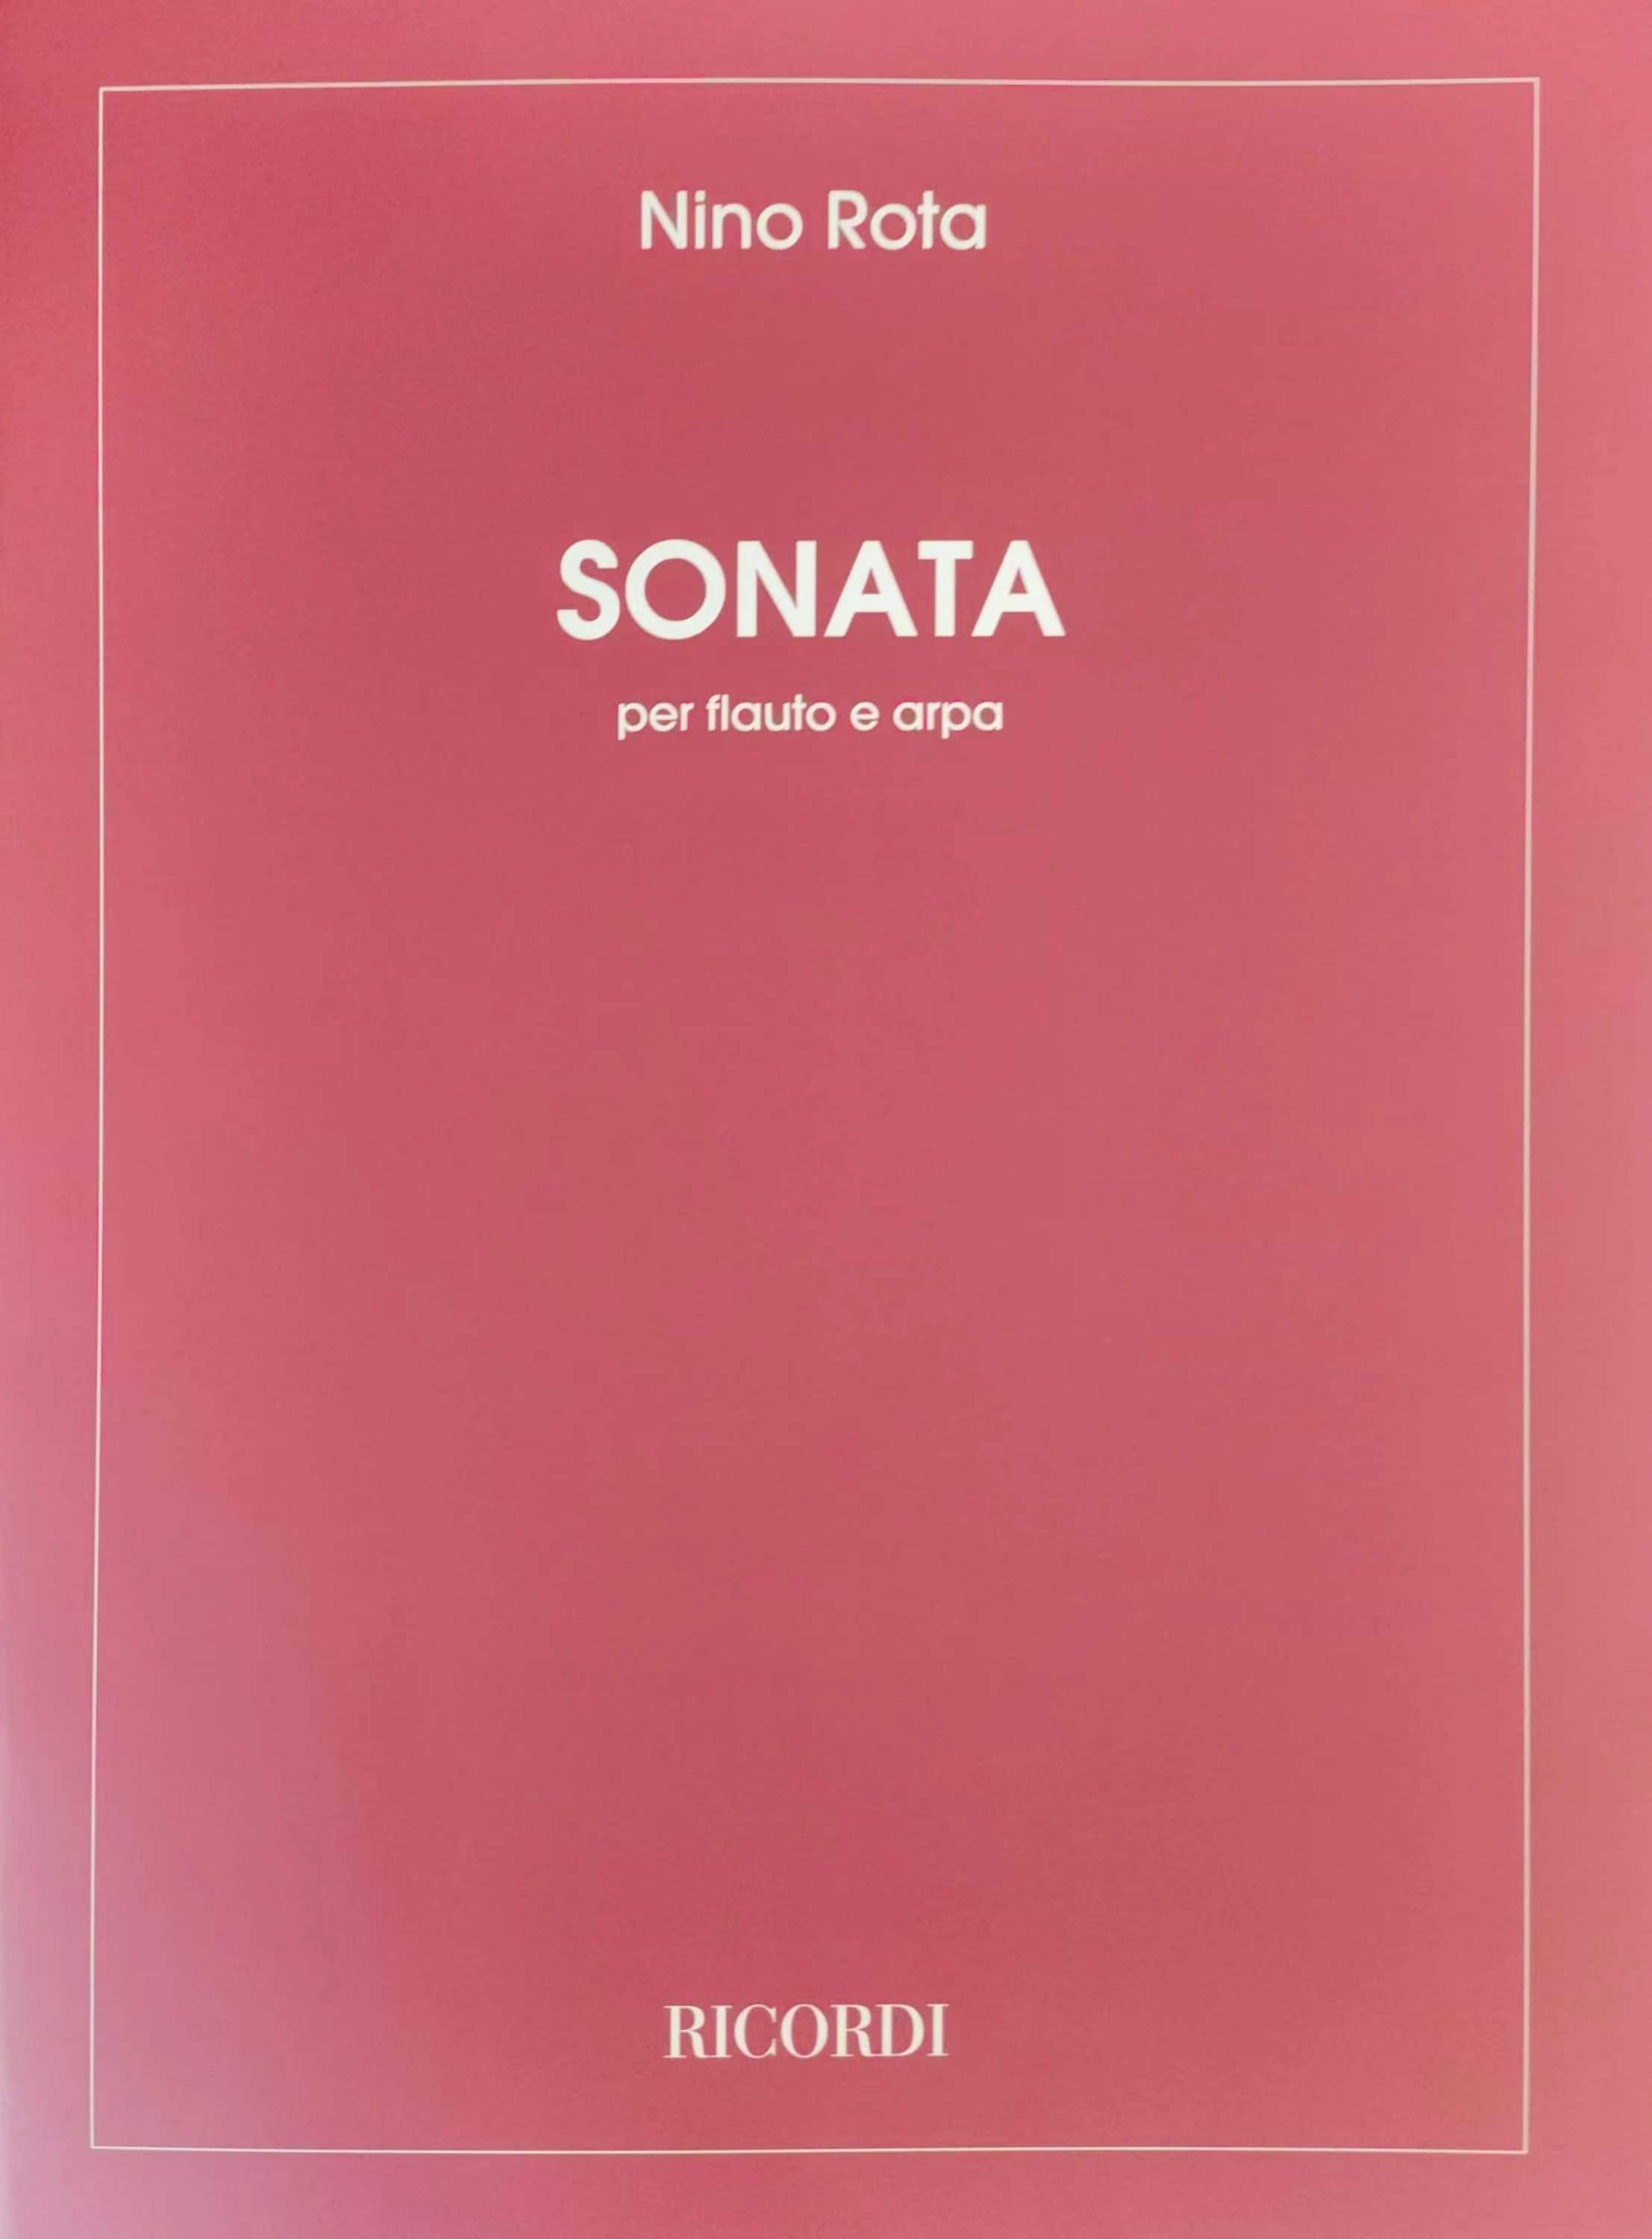 Nino Rota Sonata Score and Parts Ricordi原版乐谱书 HL50020520